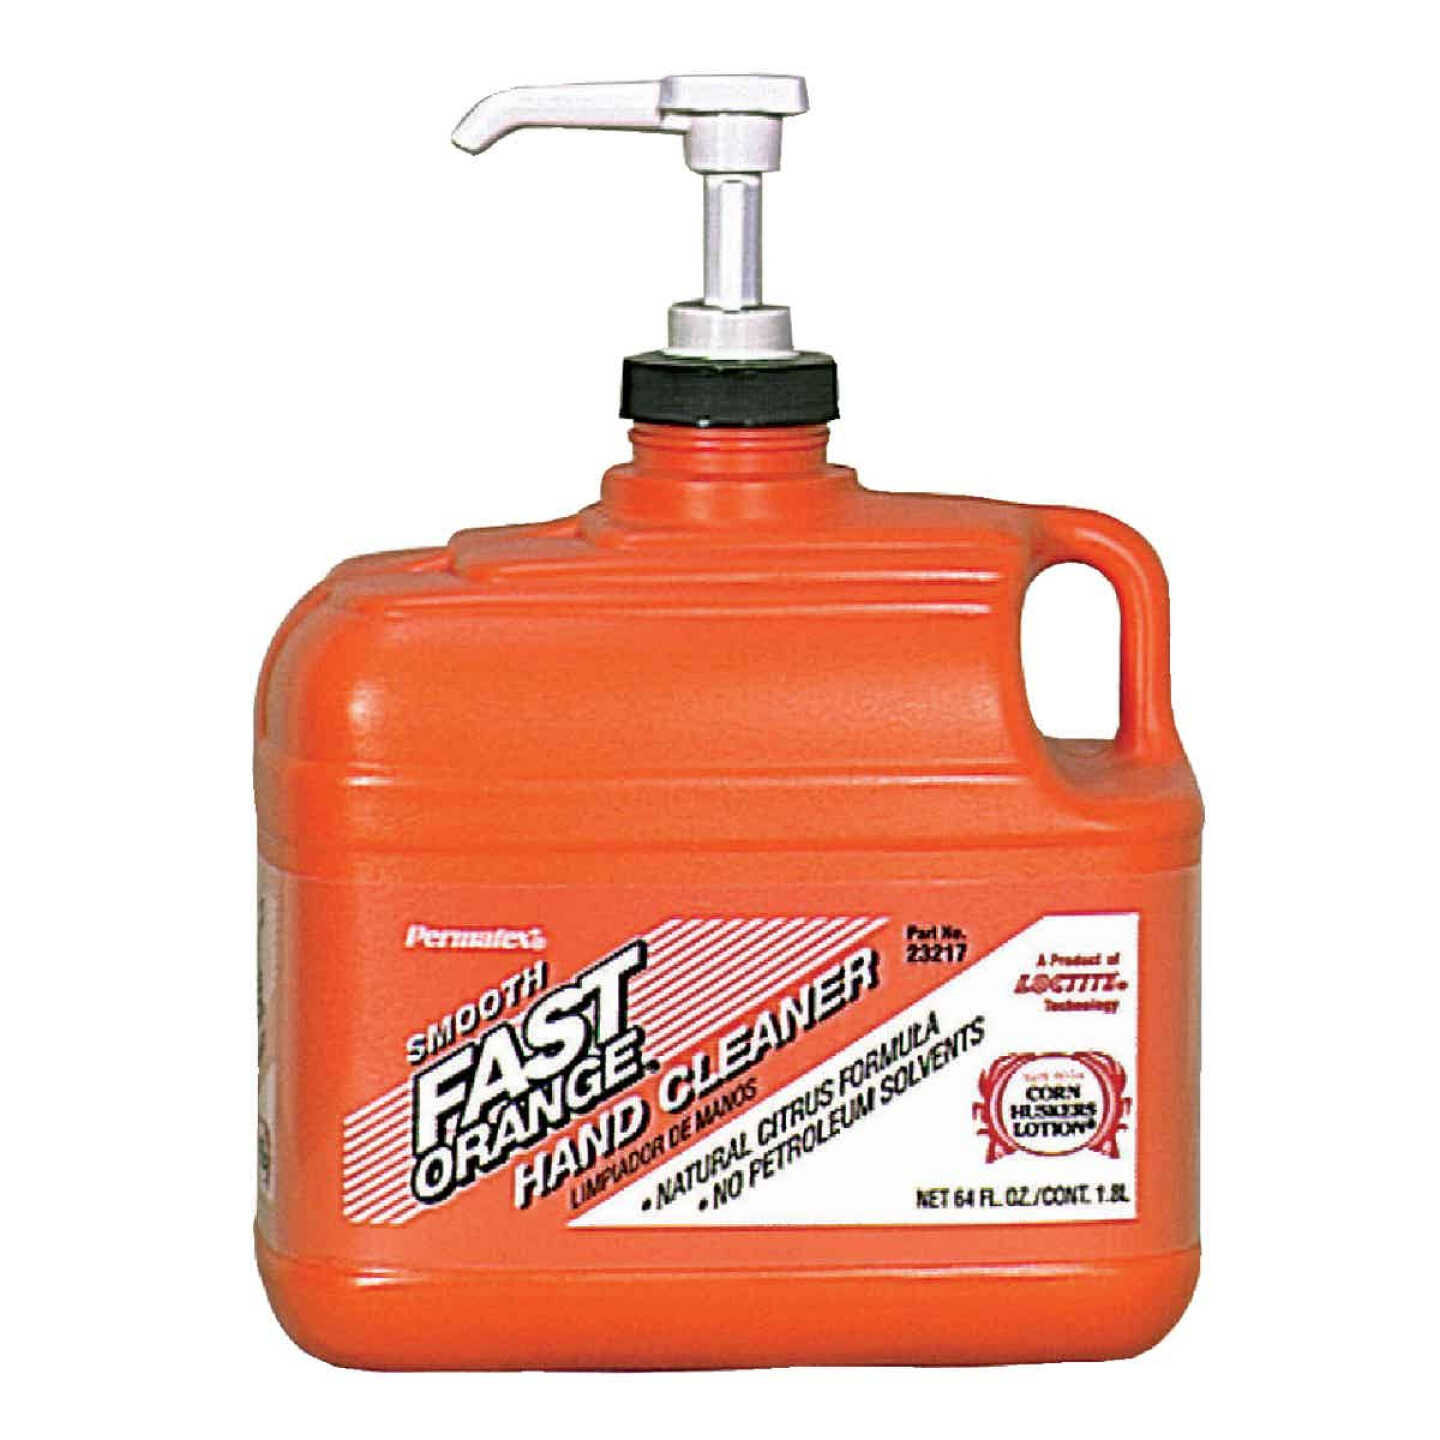 Permatex Fast Orange Smooth Lotion Hand Cleaner - Permatex 23218